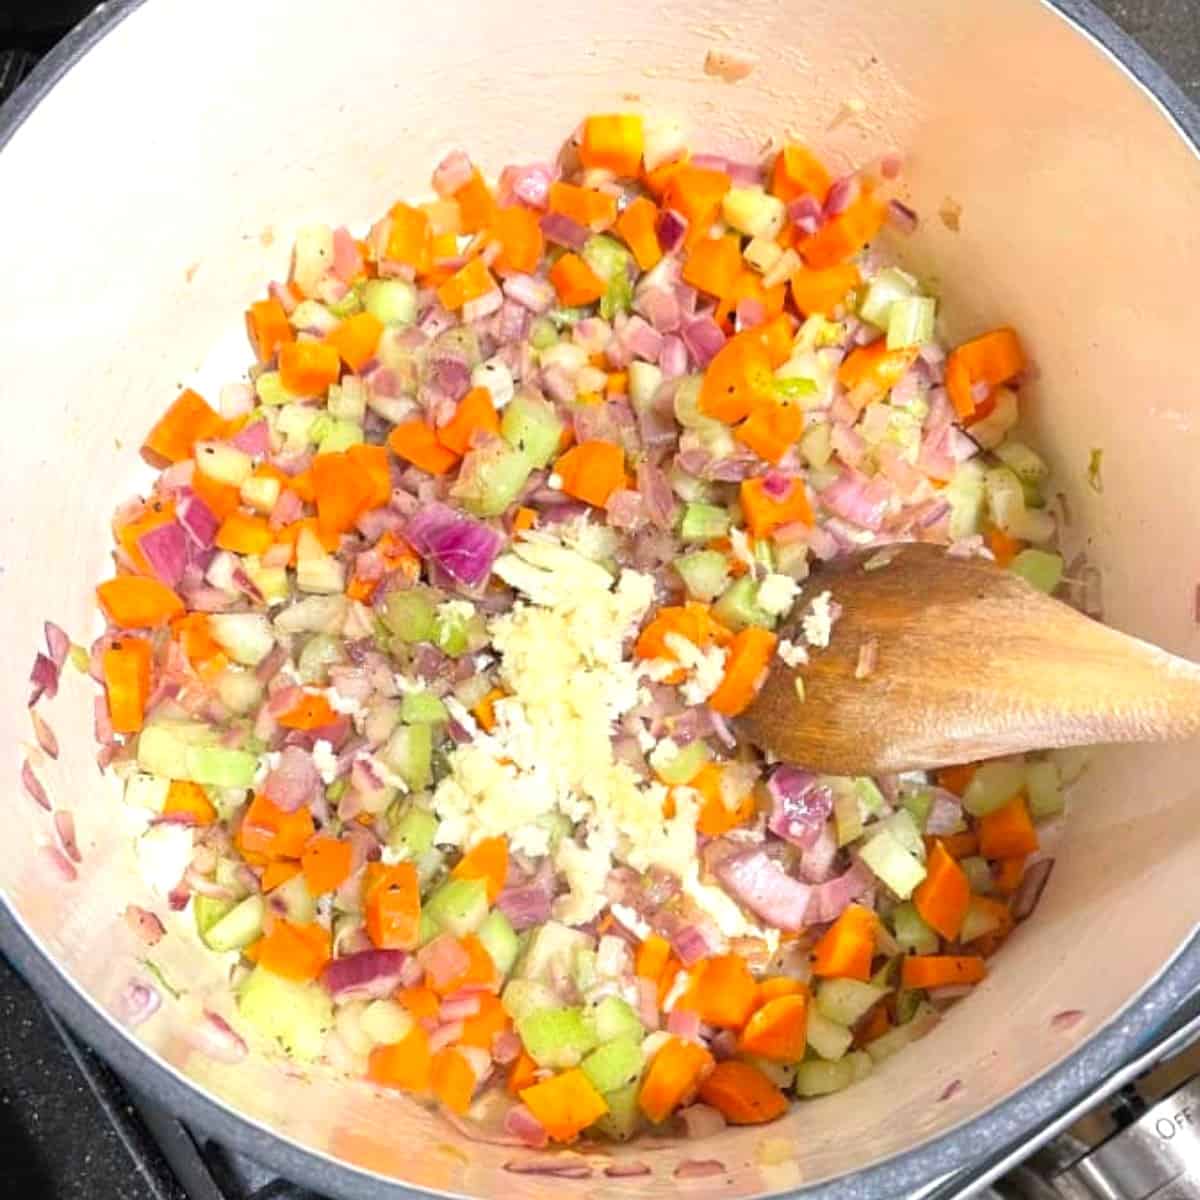 Garlic added to veggies in pot for lentil soup.